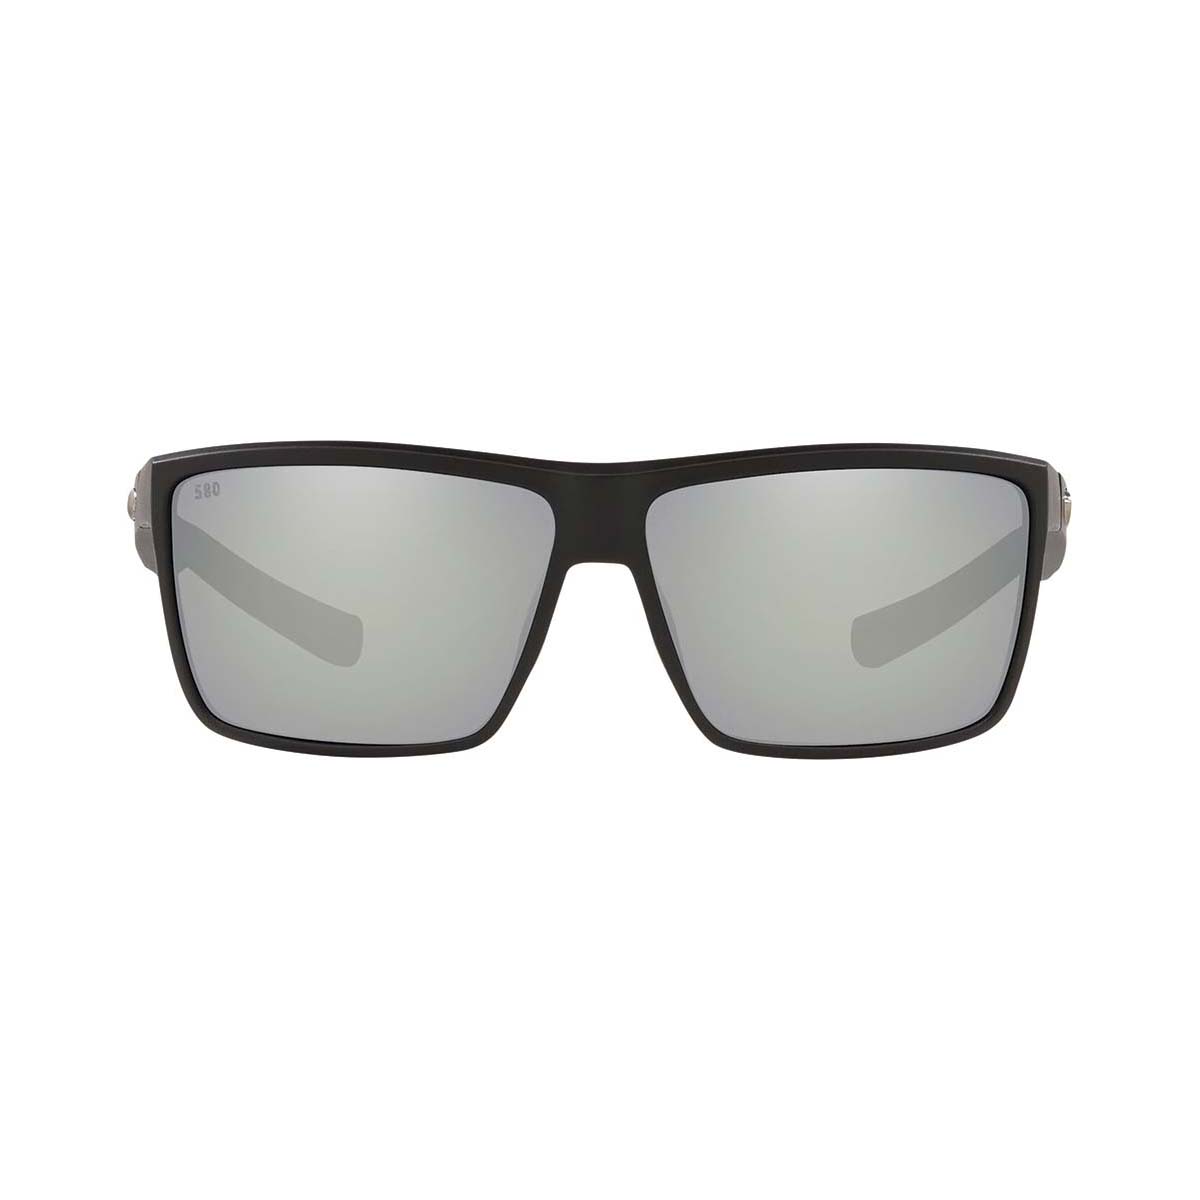 Costa Rinconcito Men's Sunglasses Black with Grey Lens